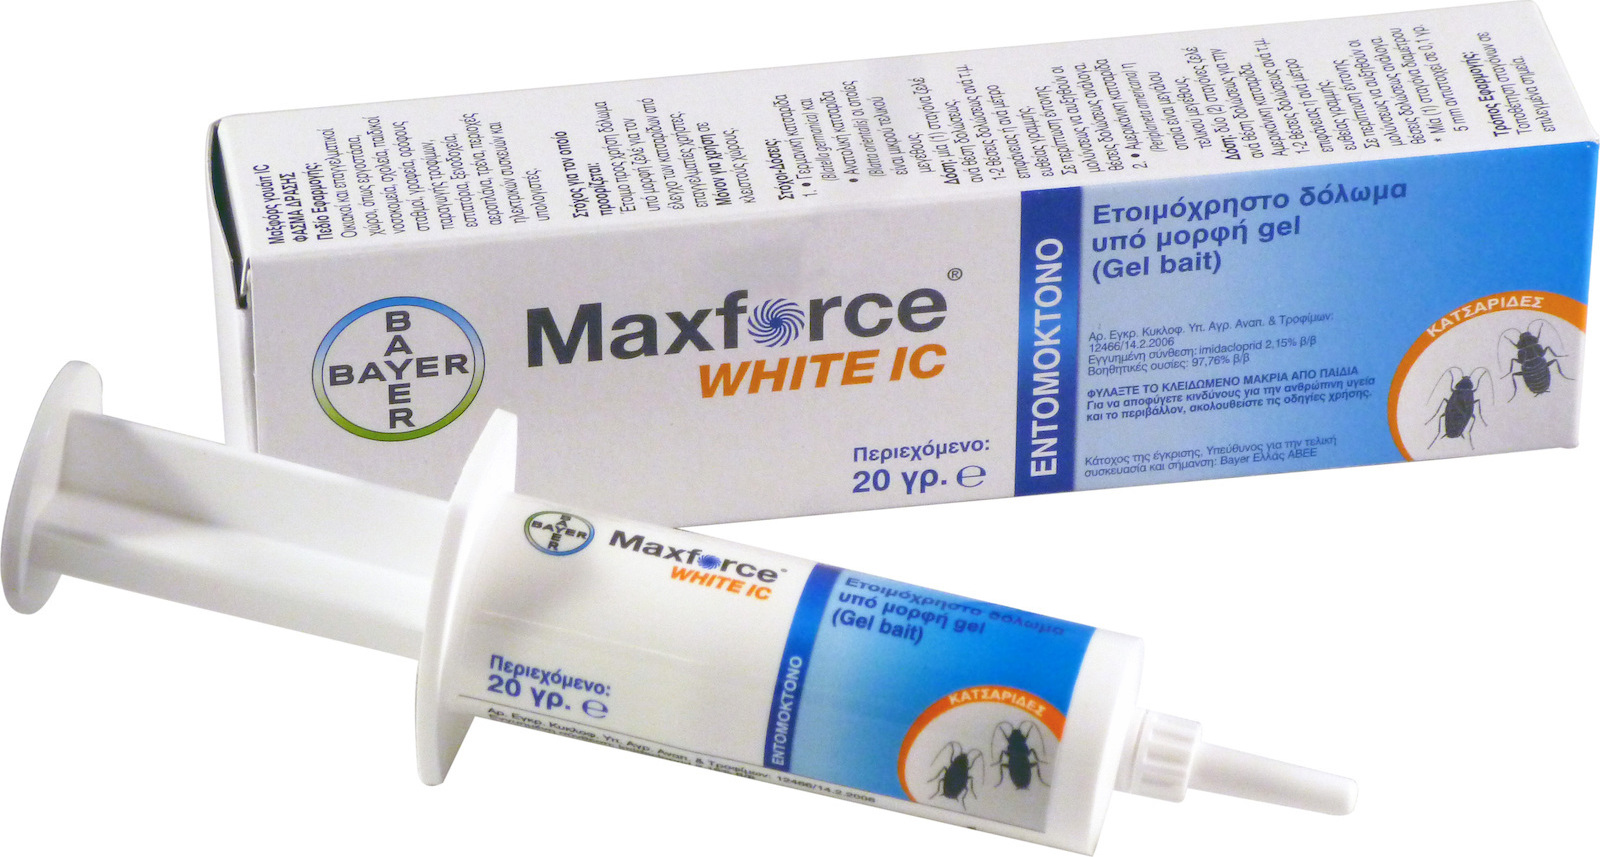 Maxforce White Gel 20gr Τζελ για Κατσαρίδες